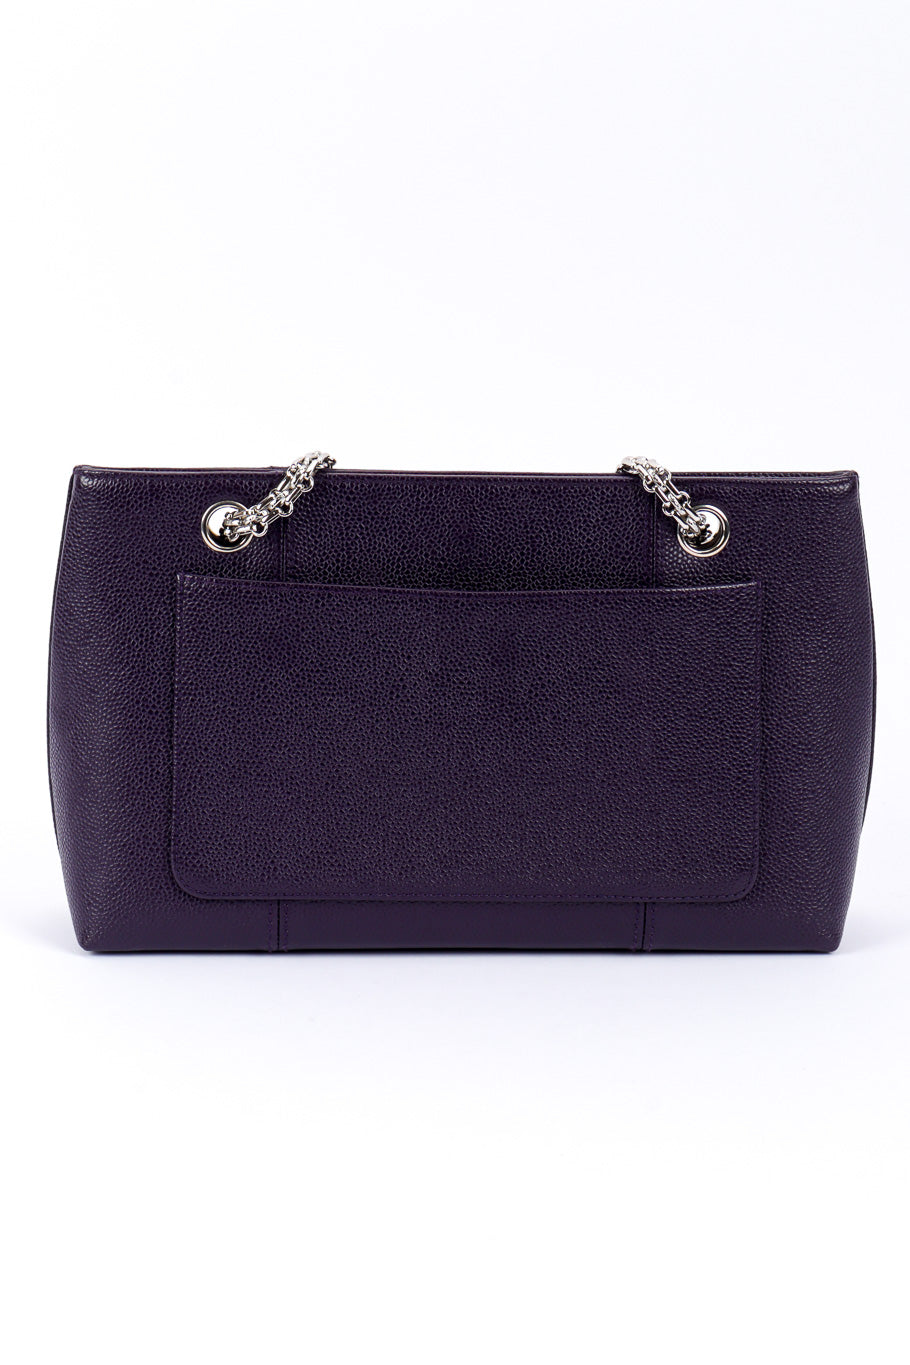 Chanel Bijoux Chain Shoulder Bag back @recessla